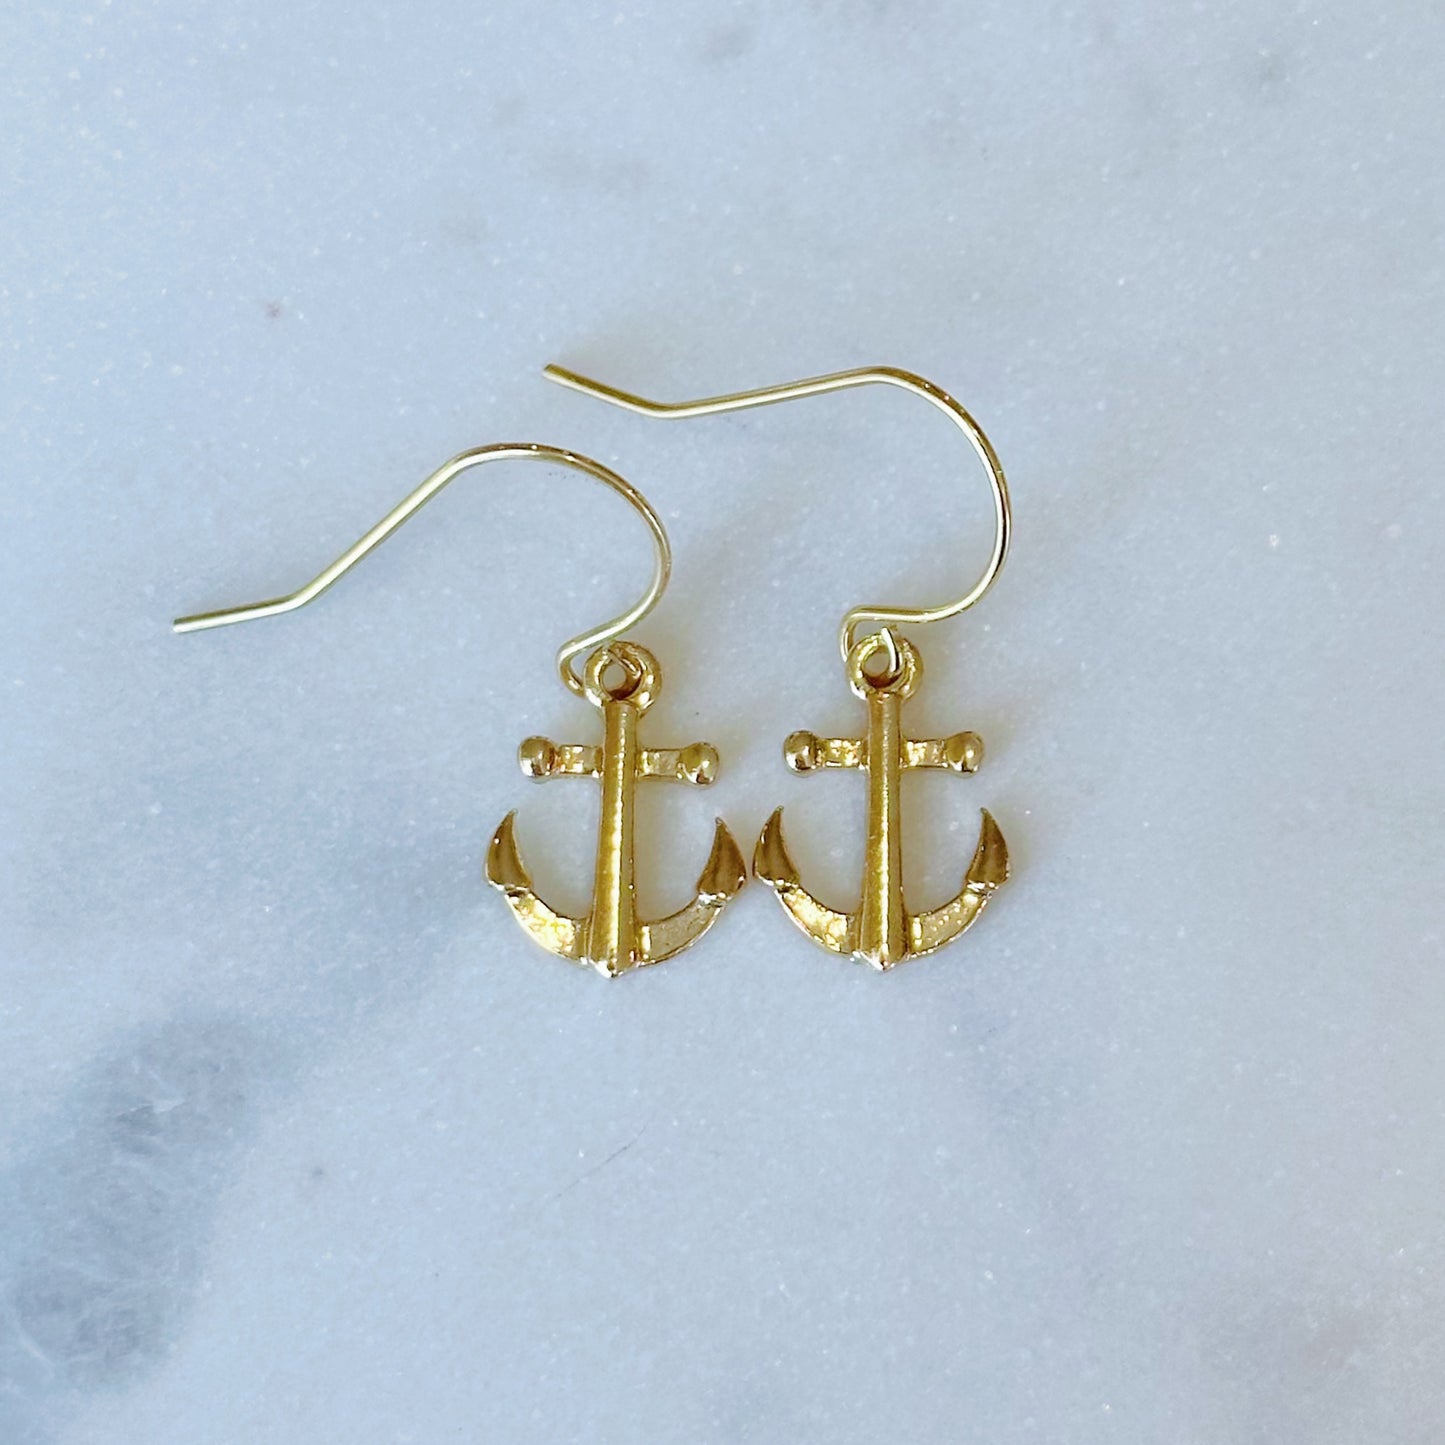 Anchor charm dangle earrings